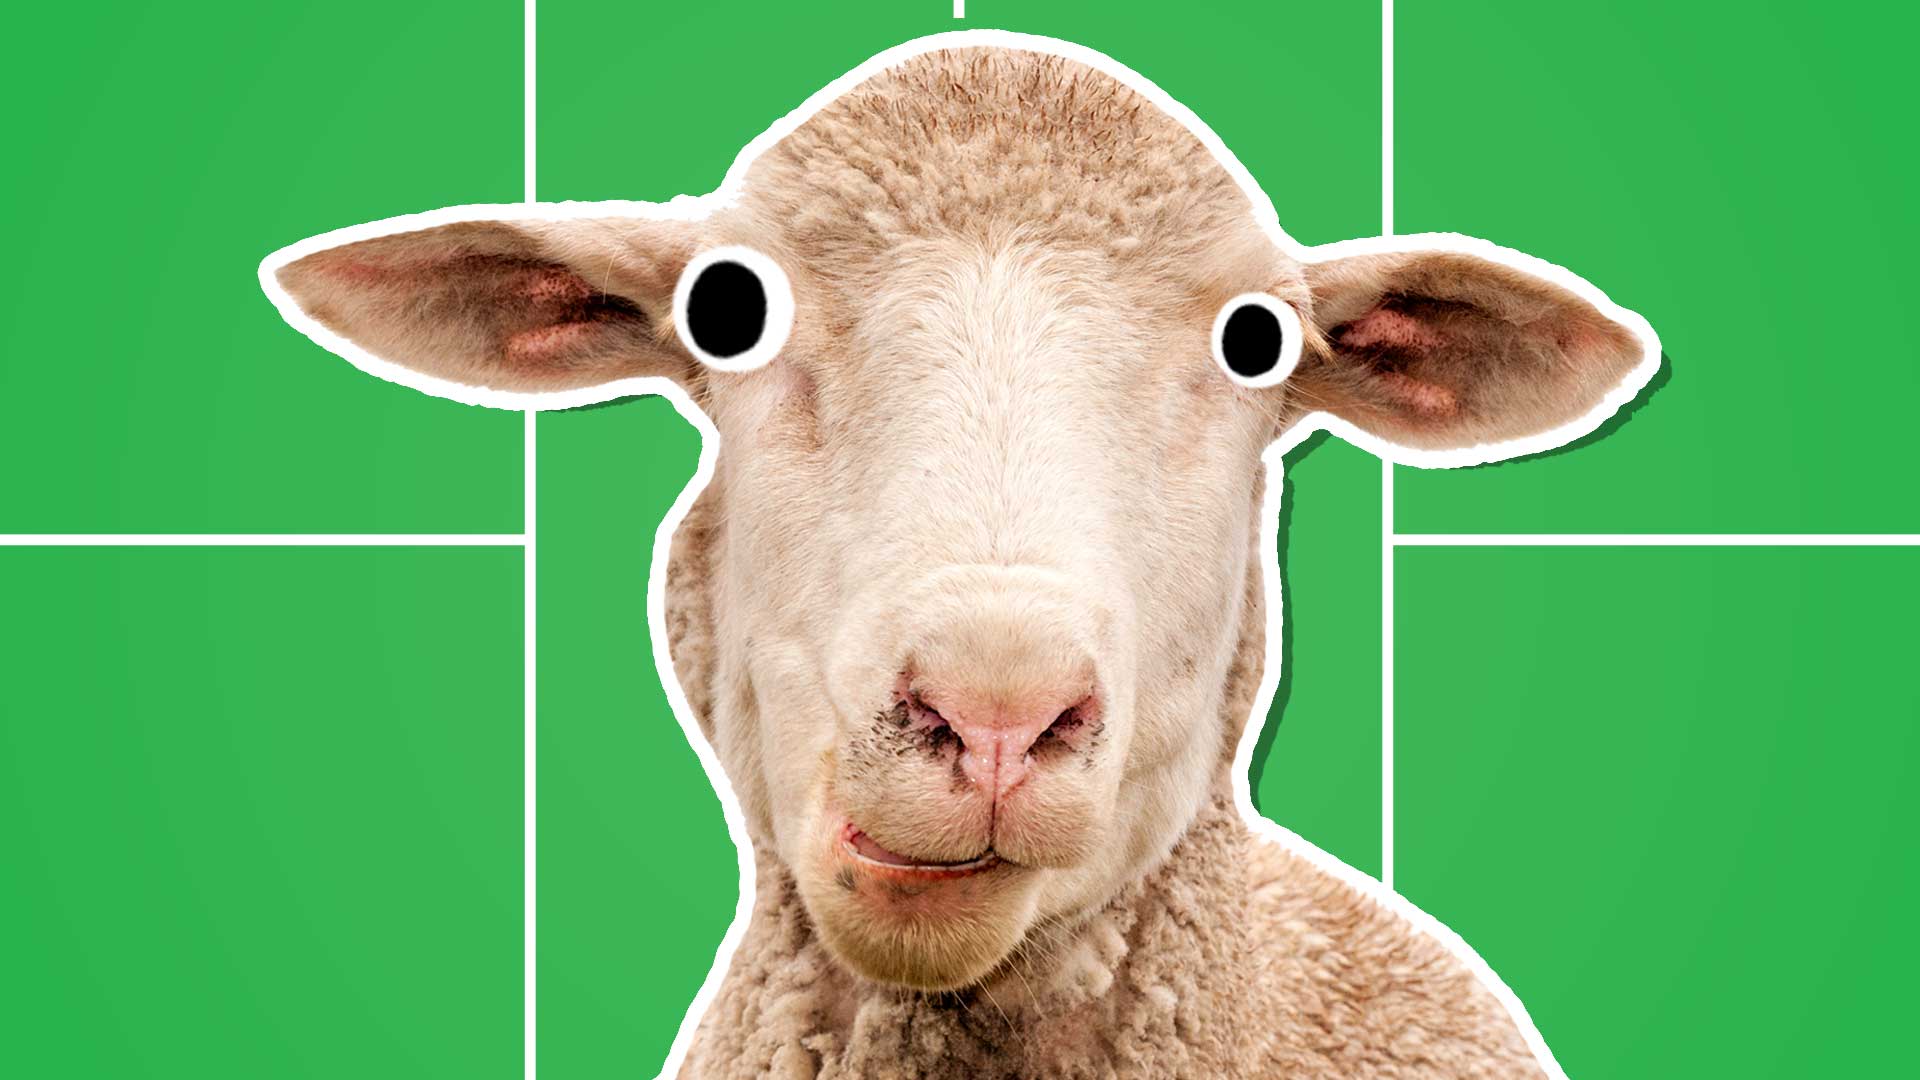 A sheep on a badminton court